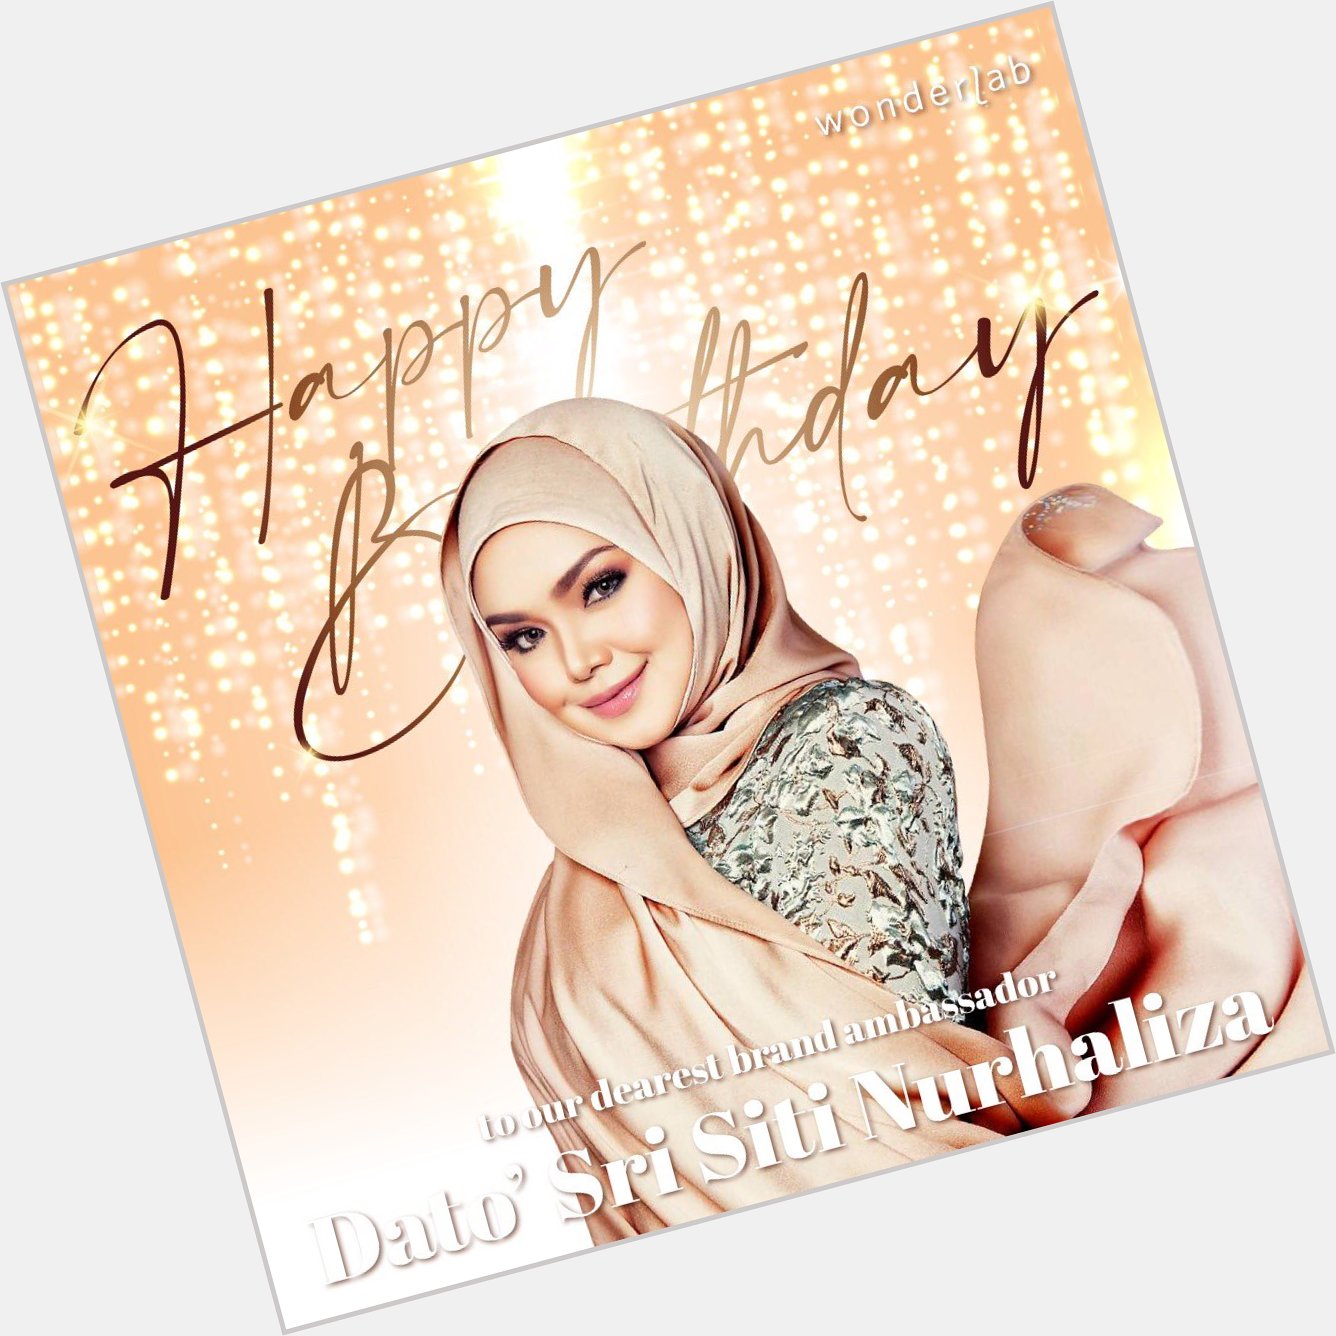 Happy Birthday DS Siti Nurhaliza

daripada &  